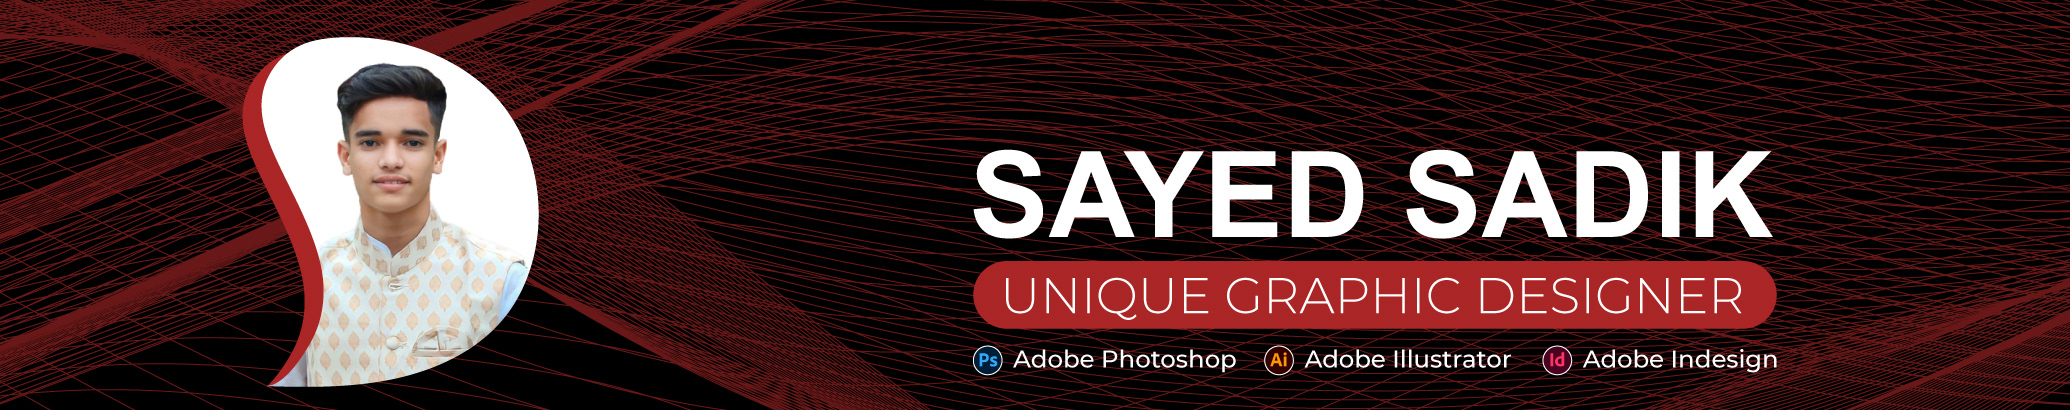 Sayed Sadik ✪'s profile banner